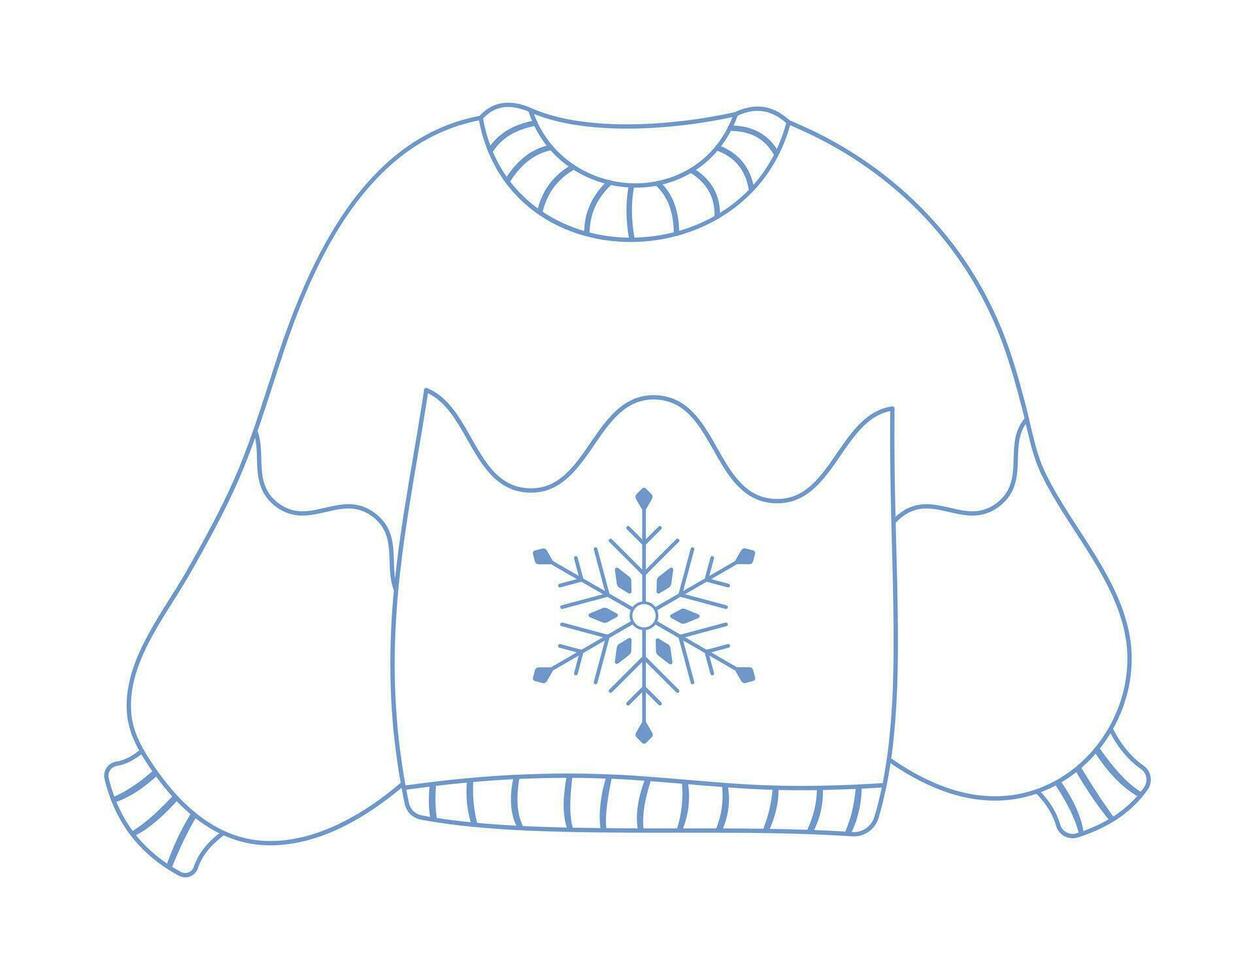 Winter theme vector arts. simple cute design art winter season vibes